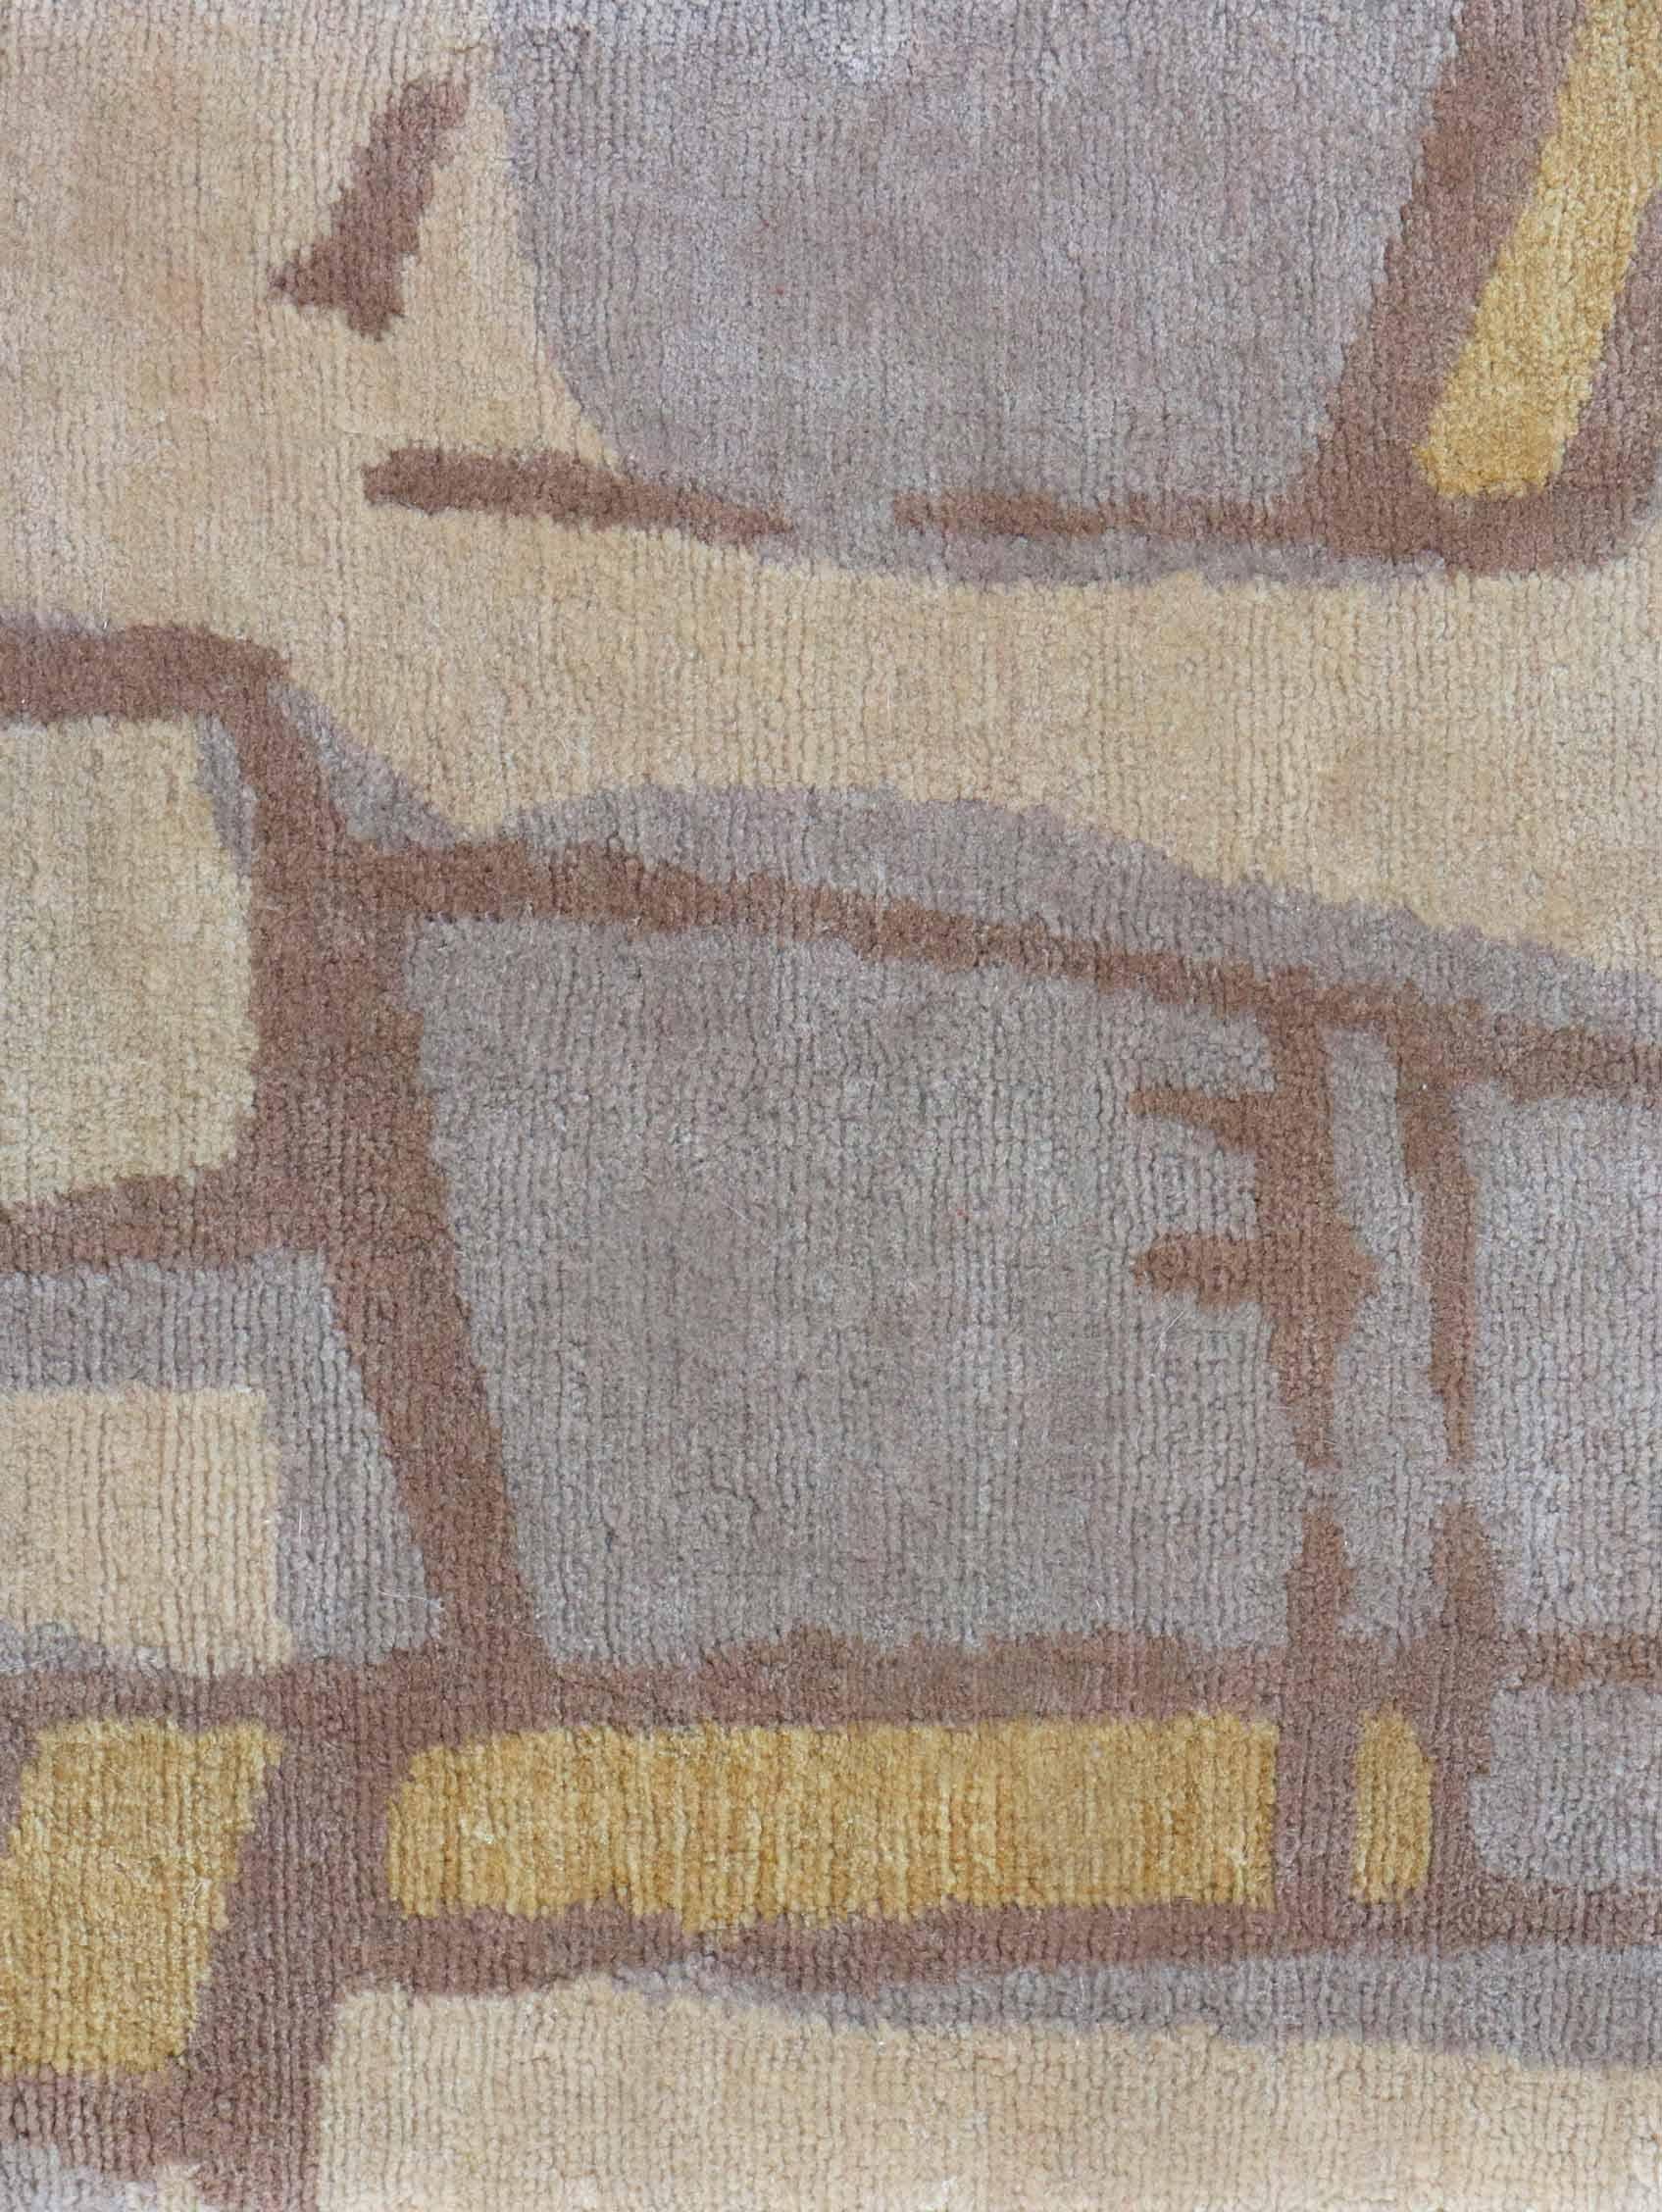 Rug pattern: Quotidiana - Ilios
Material: 100% Merino Wool
Quality: Tibetan Cross Weave, handwoven 
Size: 8’-0